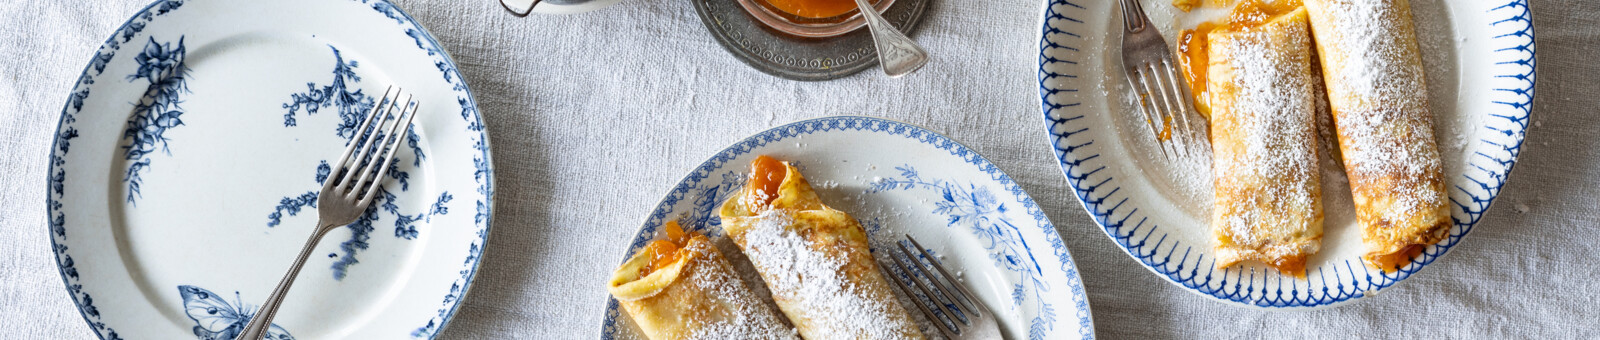     Marillenpalatschinken (Apricot pancakes) 